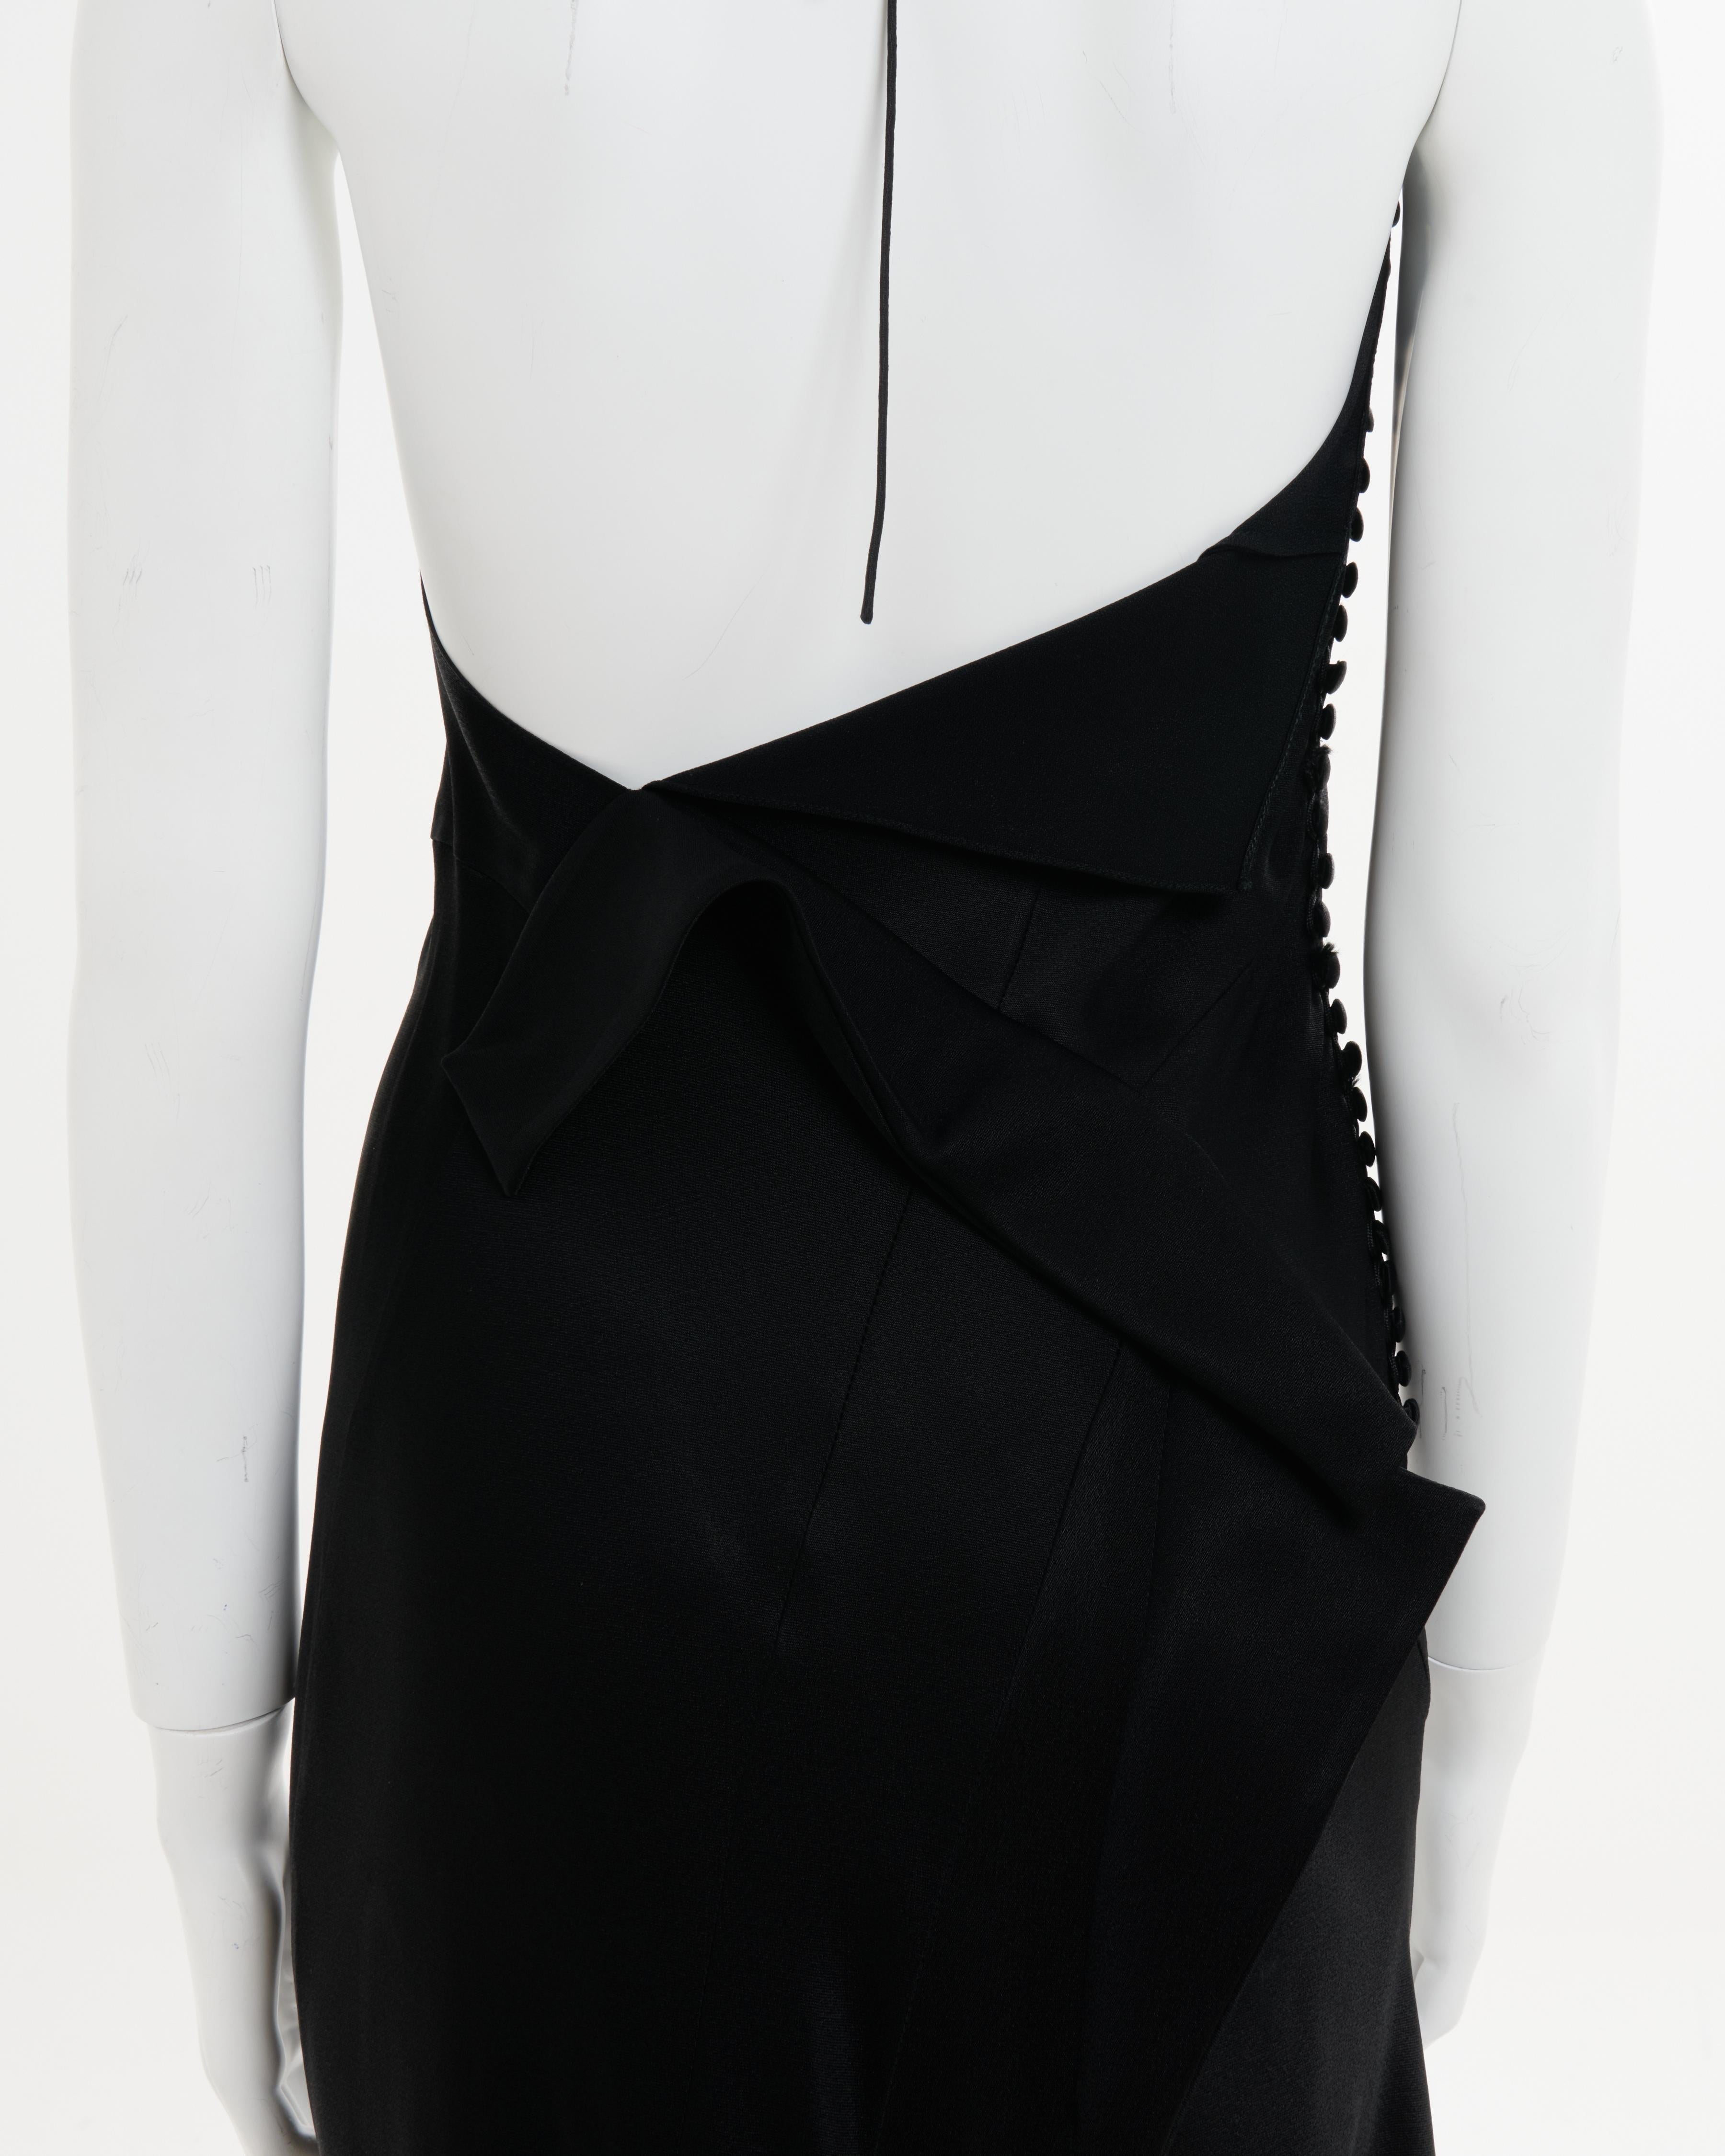 Christian Dior by John Galliano F/W 2000 Black bias-cut trained evening dress For Sale 2